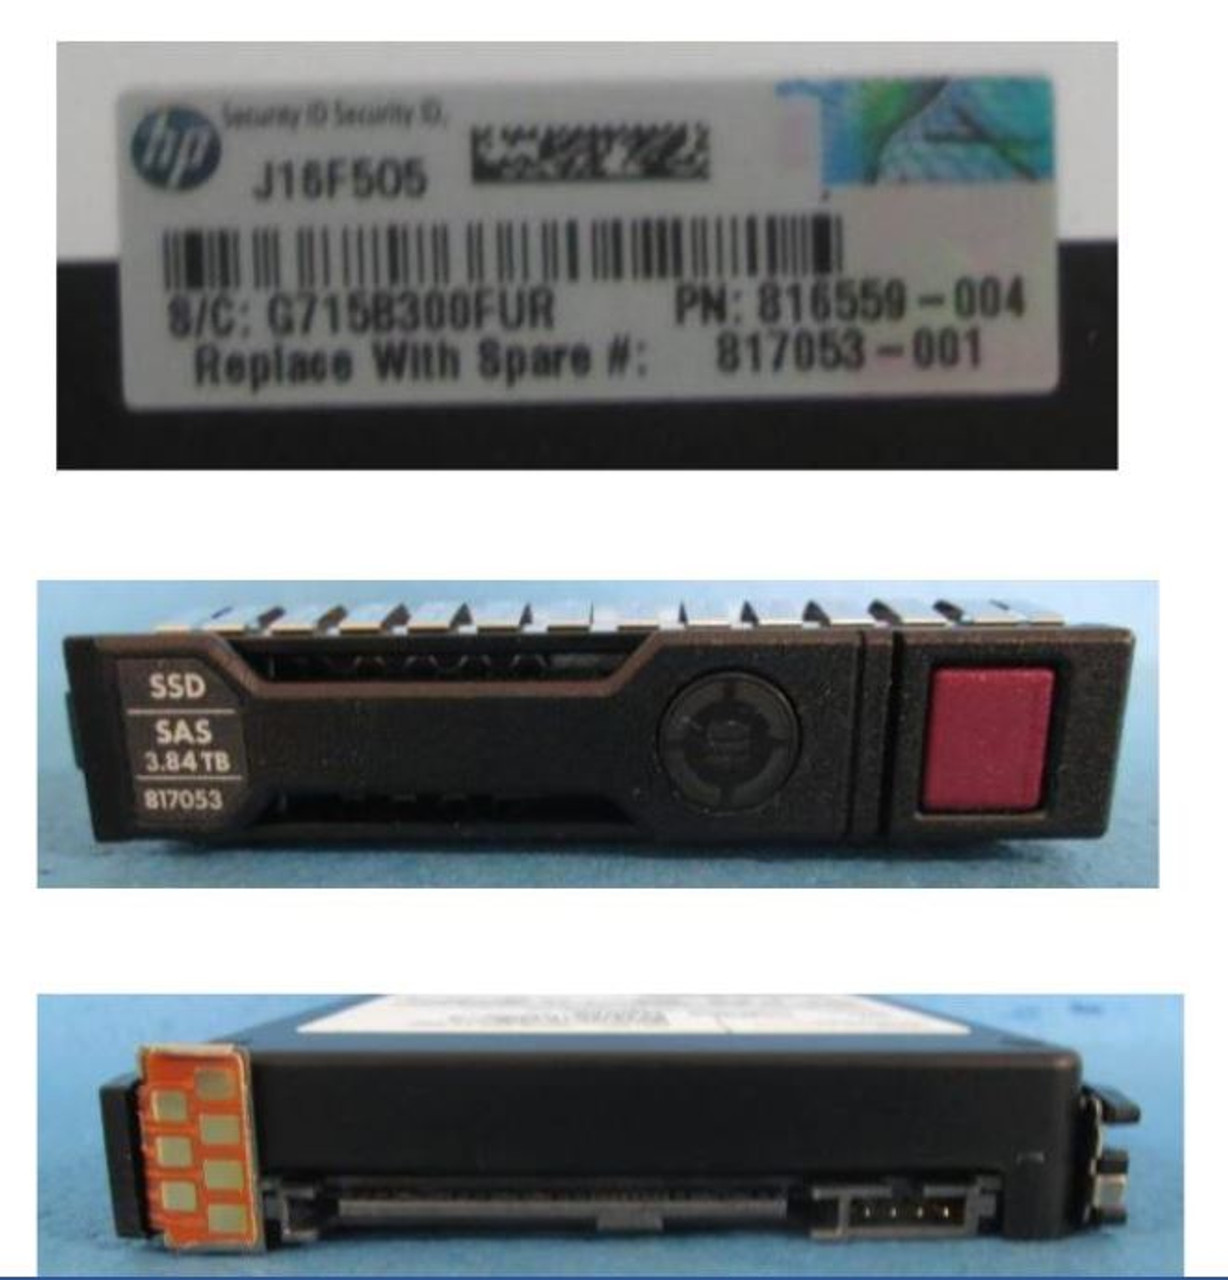 SPS-DRV SSD 3.84TB 12G 2.5 SAS RI PLP SC - 817053-001